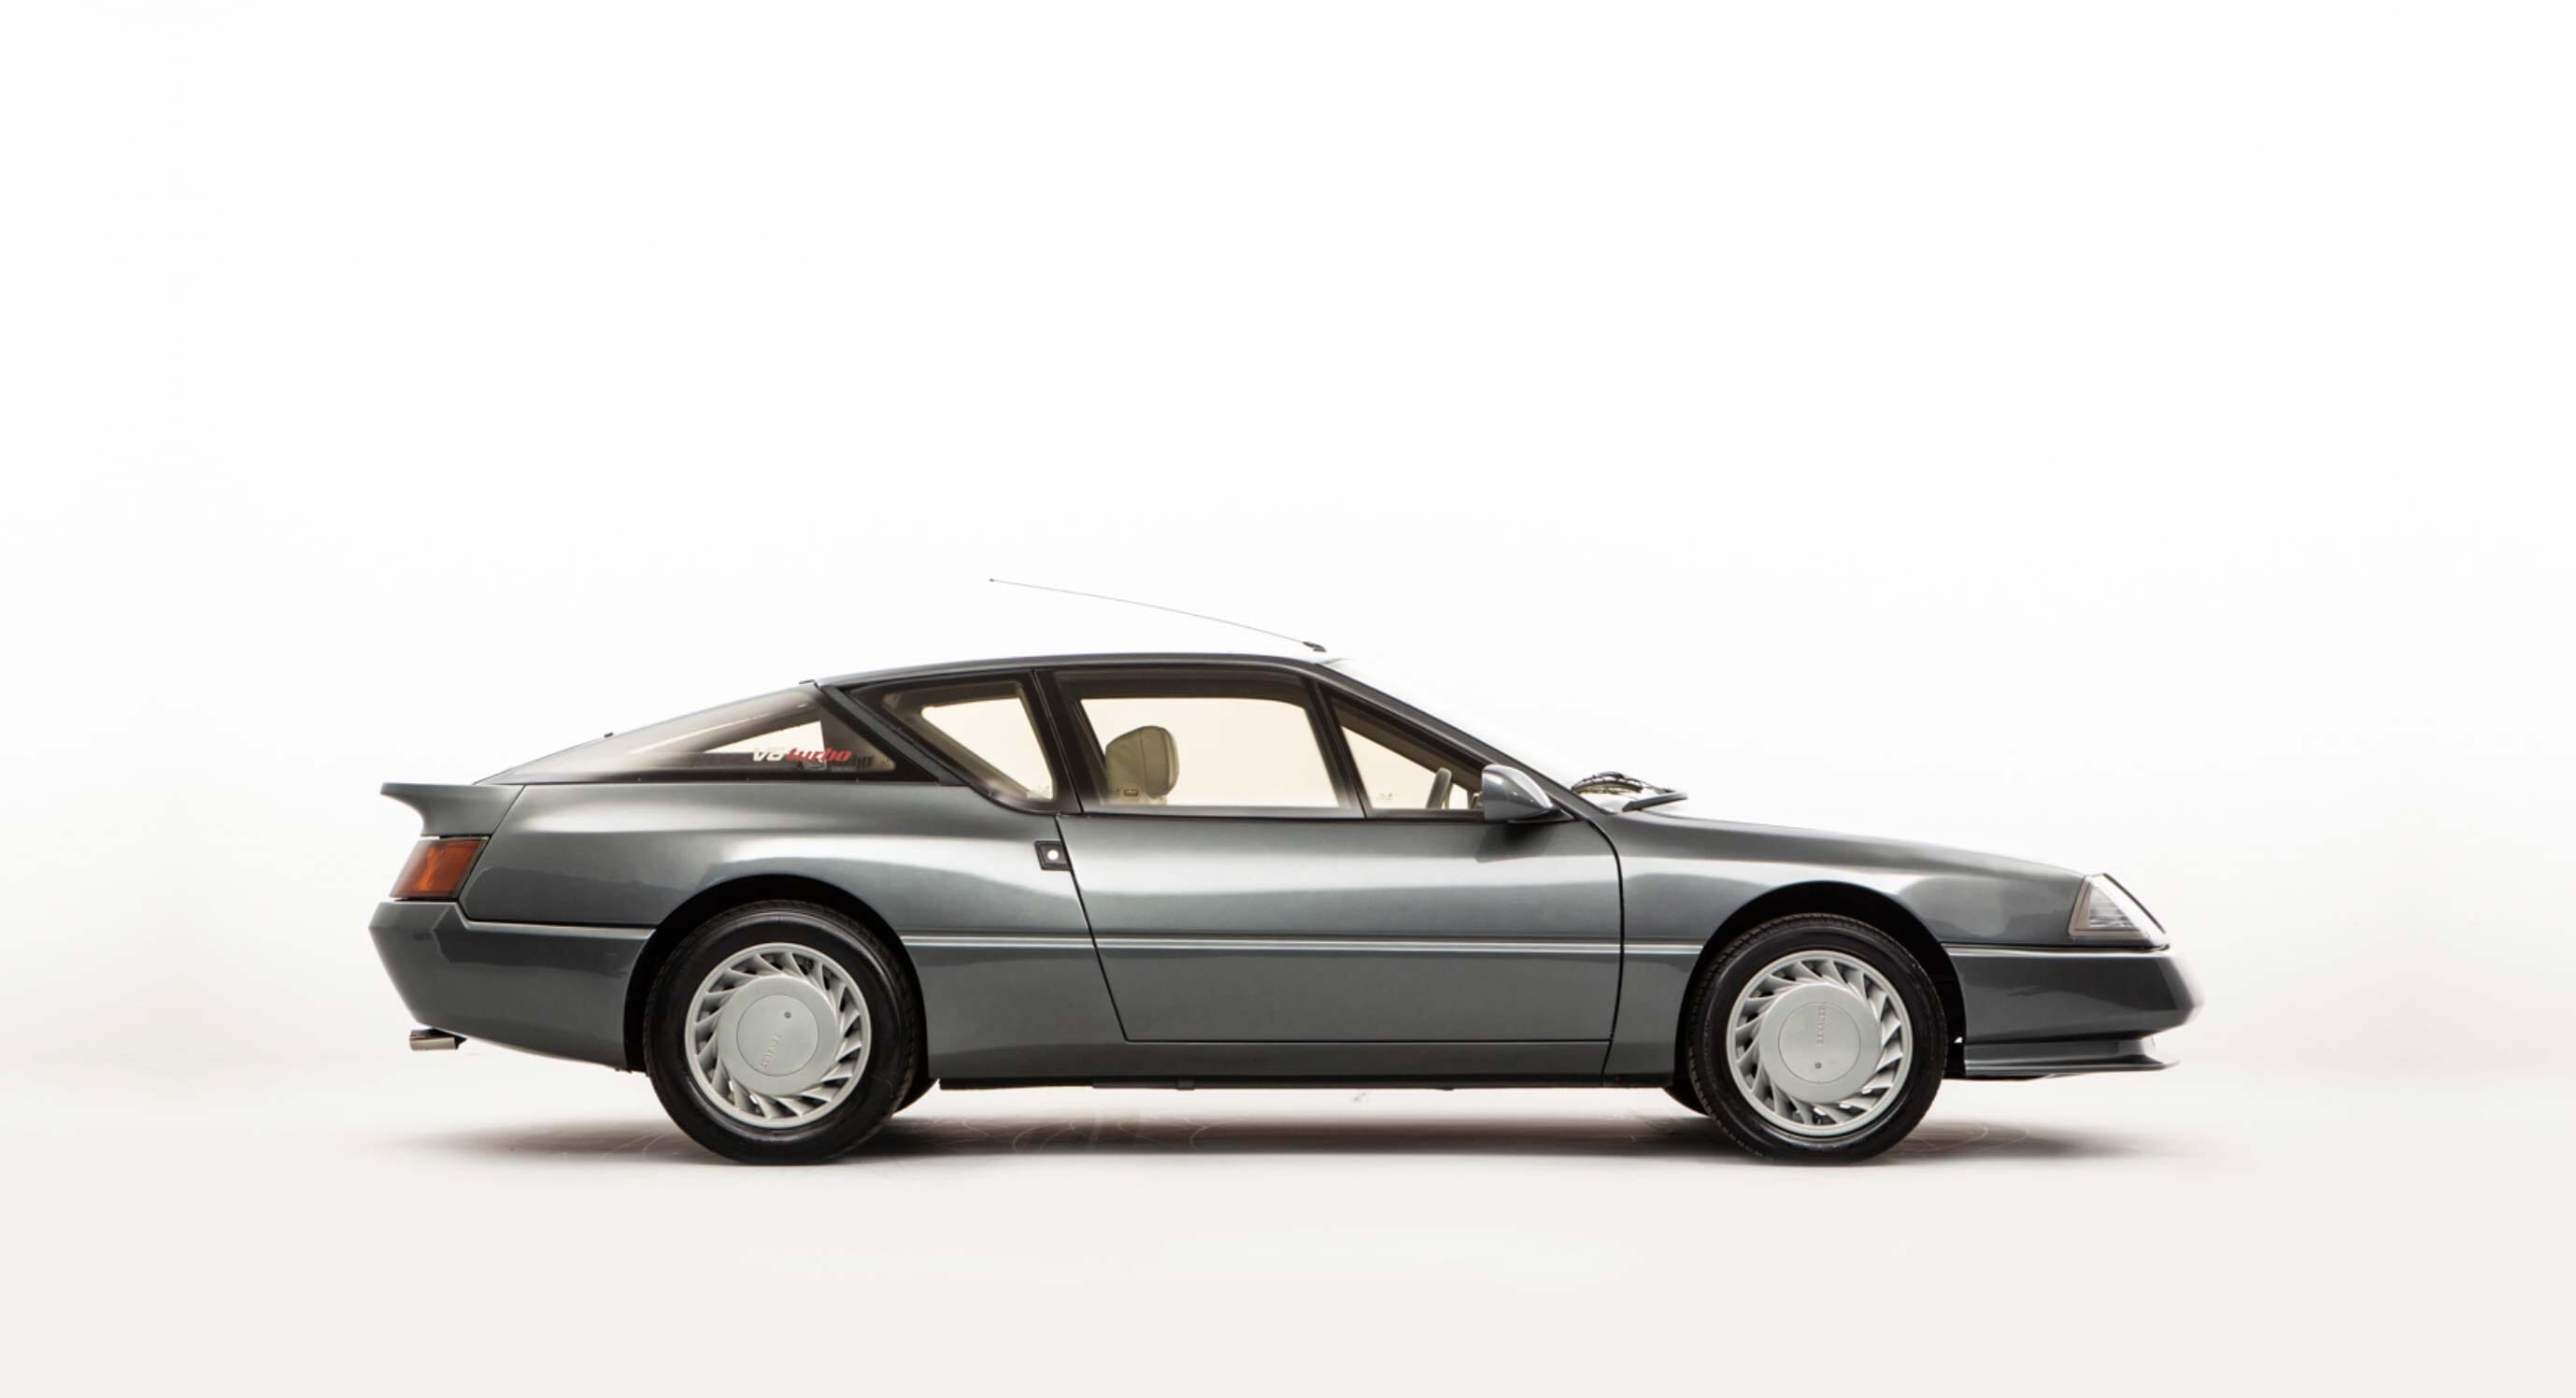 This 1987 Alpine GTA V6 Turbo embodies the decade